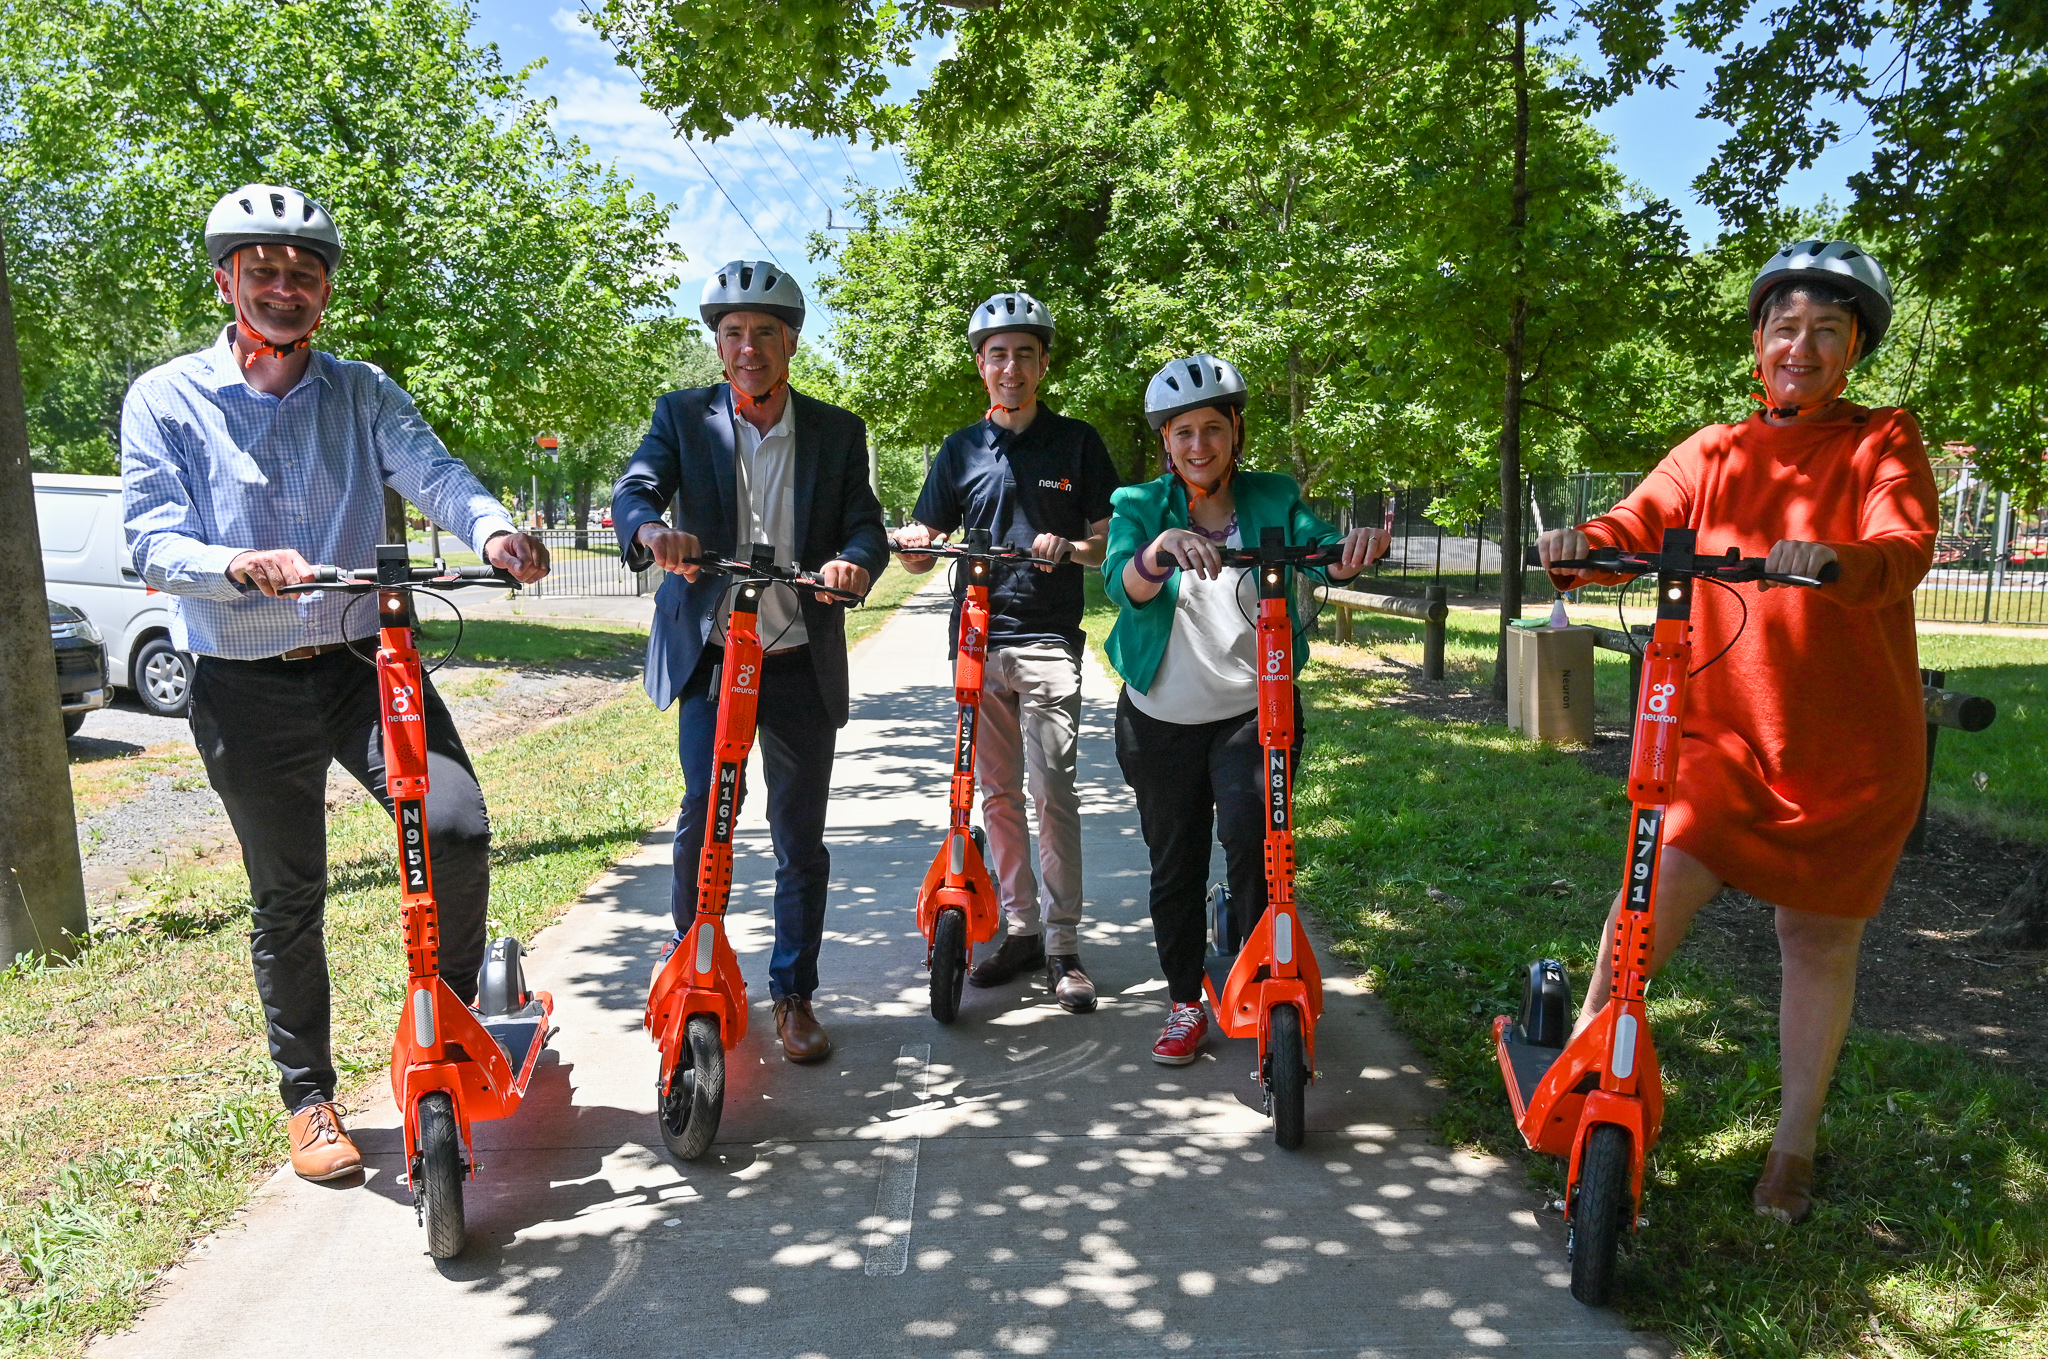 Cr Daniel Moloney, Michael Poulton, Richard Hannah, Julianna Addison, and Michalea Settle on orange e-scooters at Victoria Park